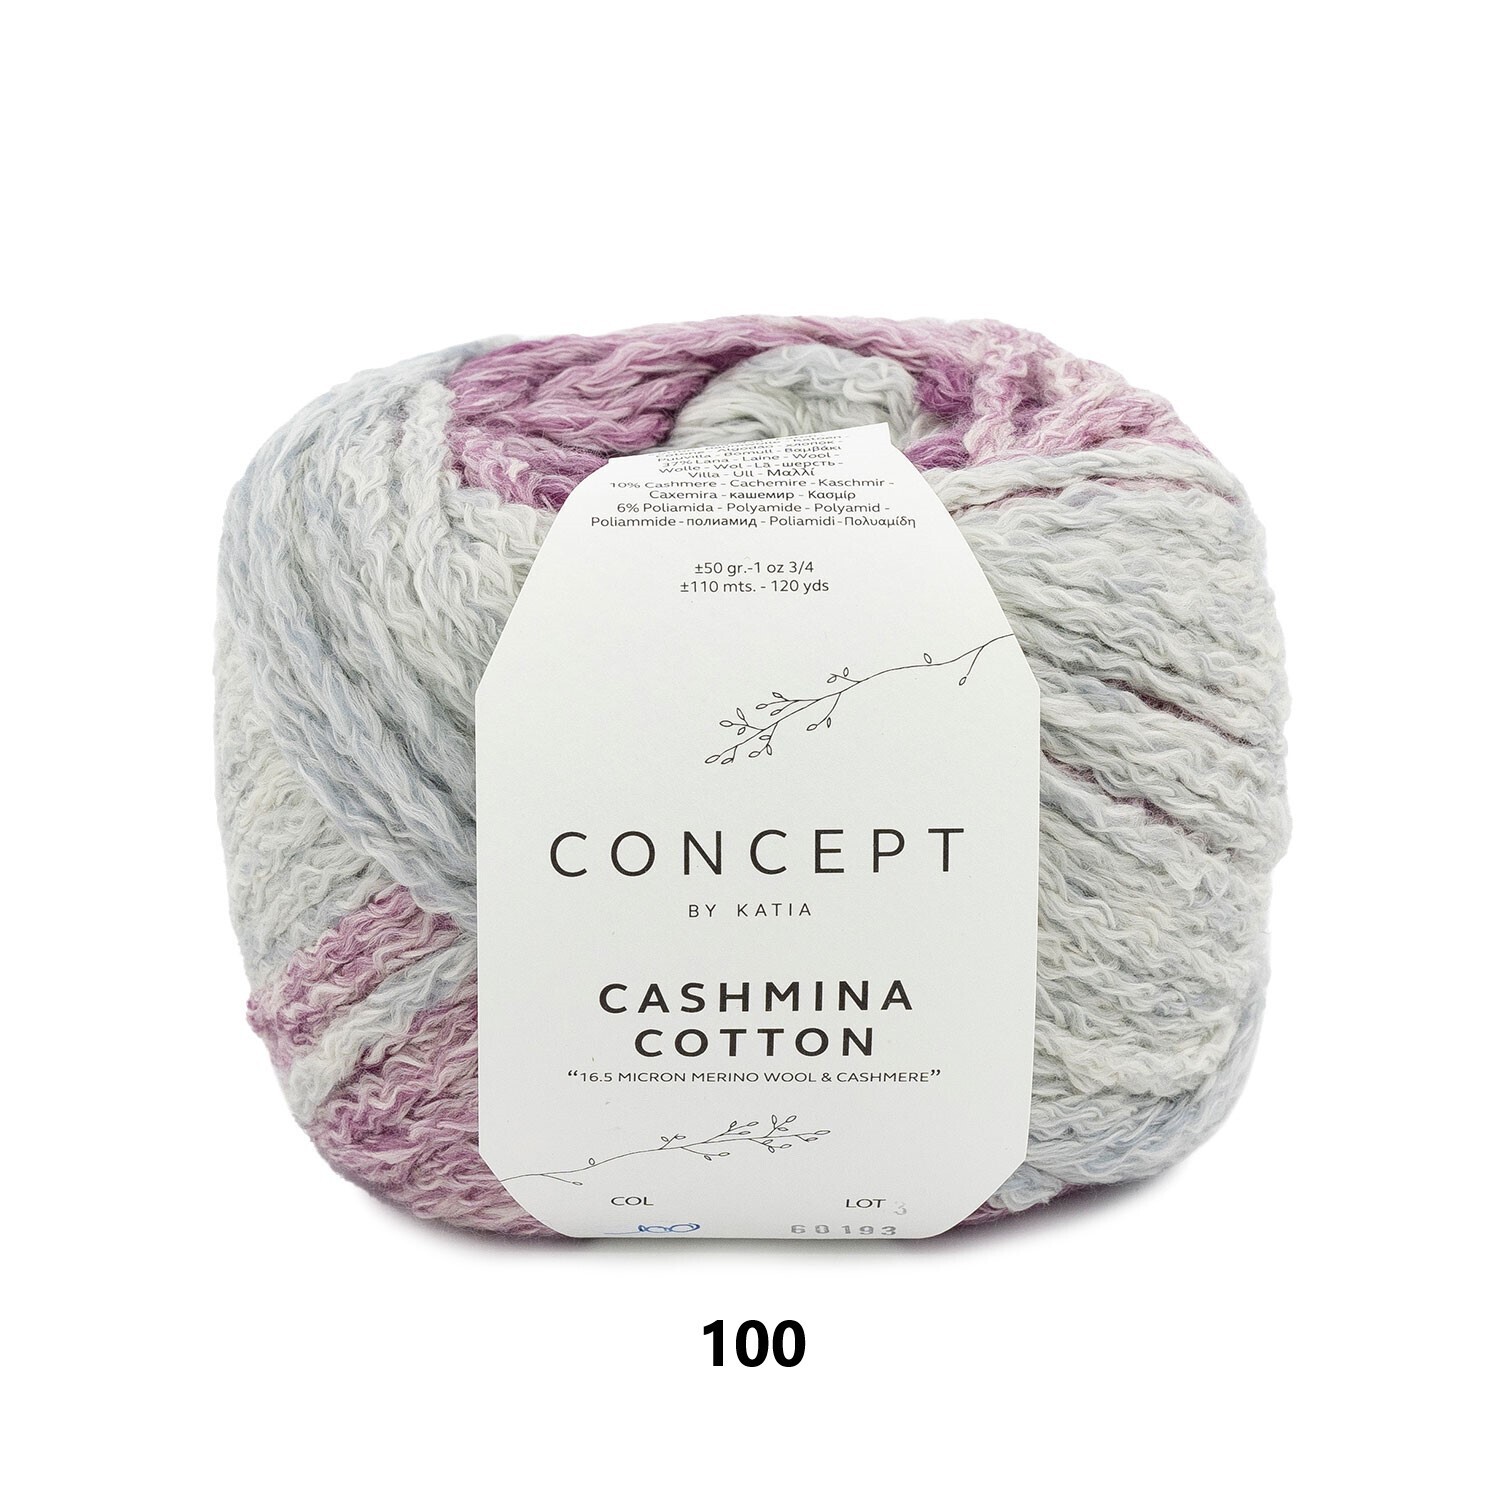 Cashmina cotton